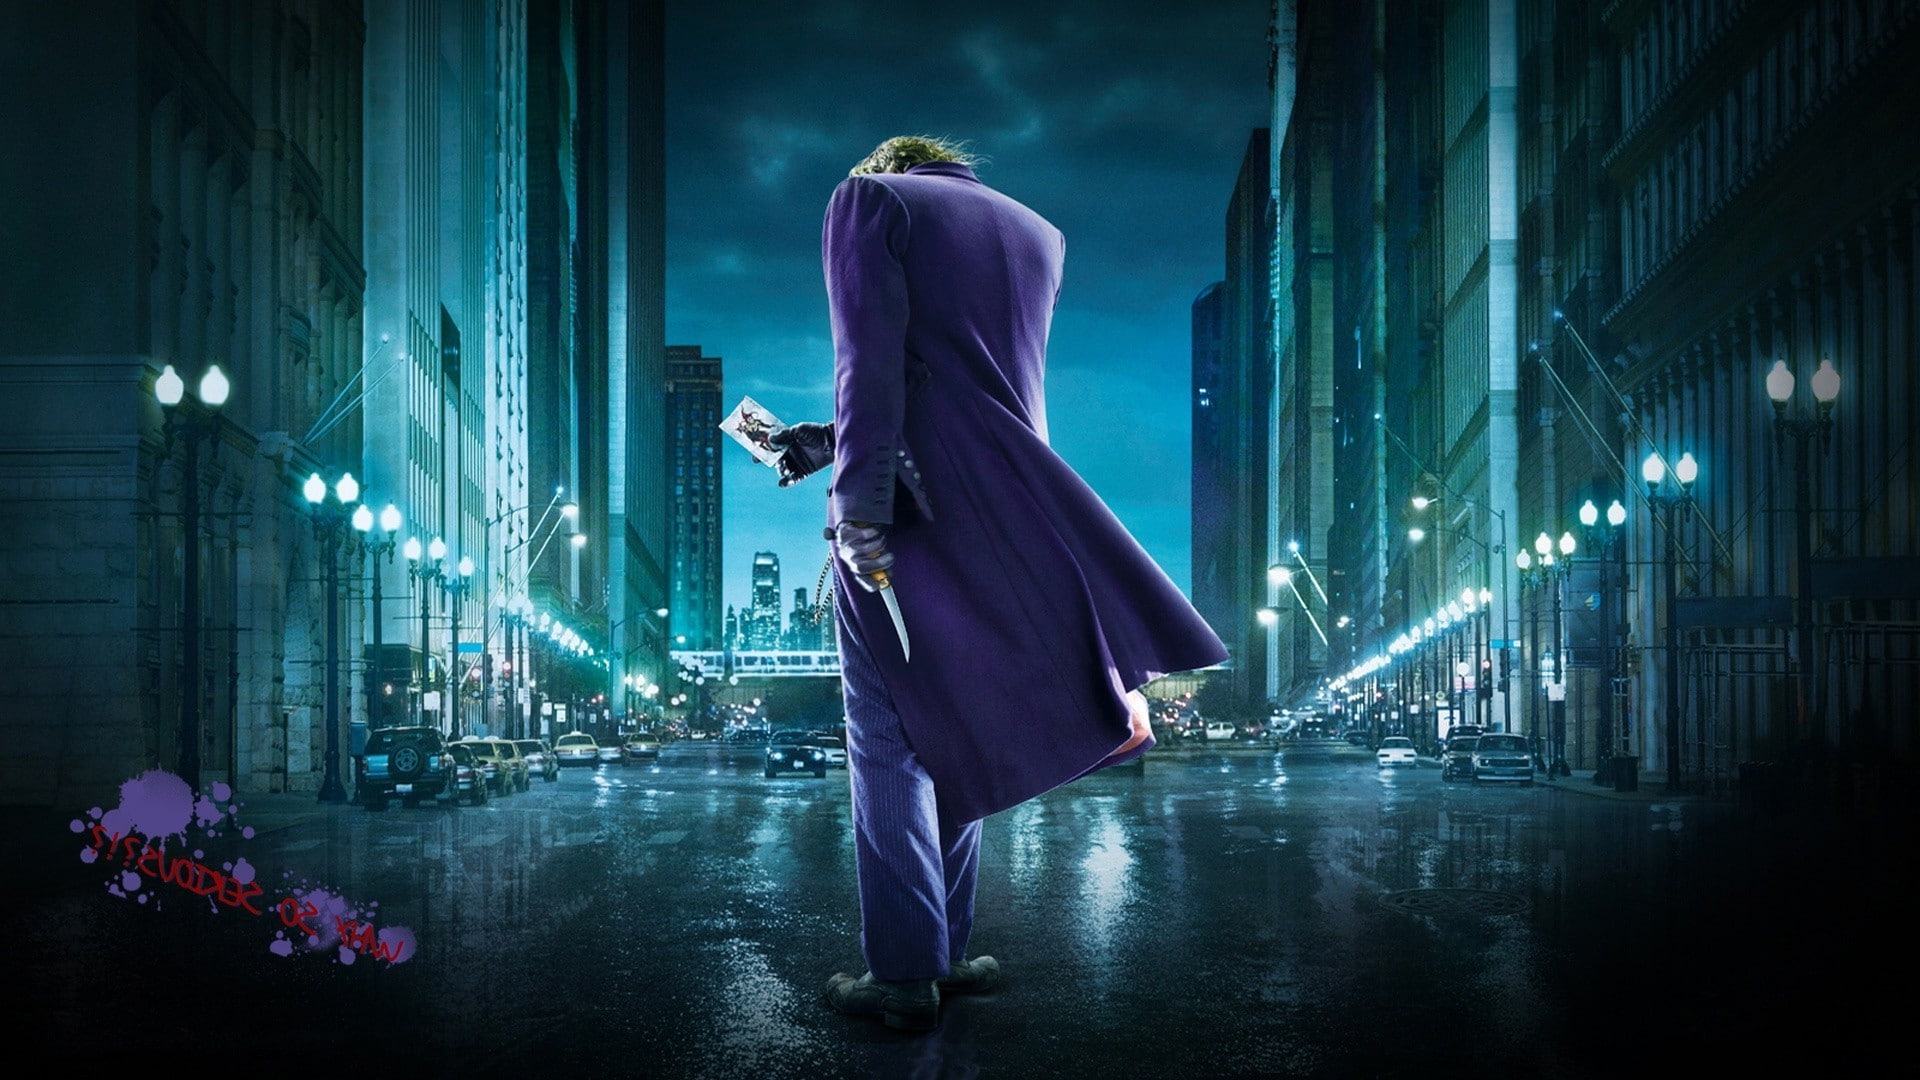 Batman, Heath Ledger, Joker, movies, The Dark Knight, city